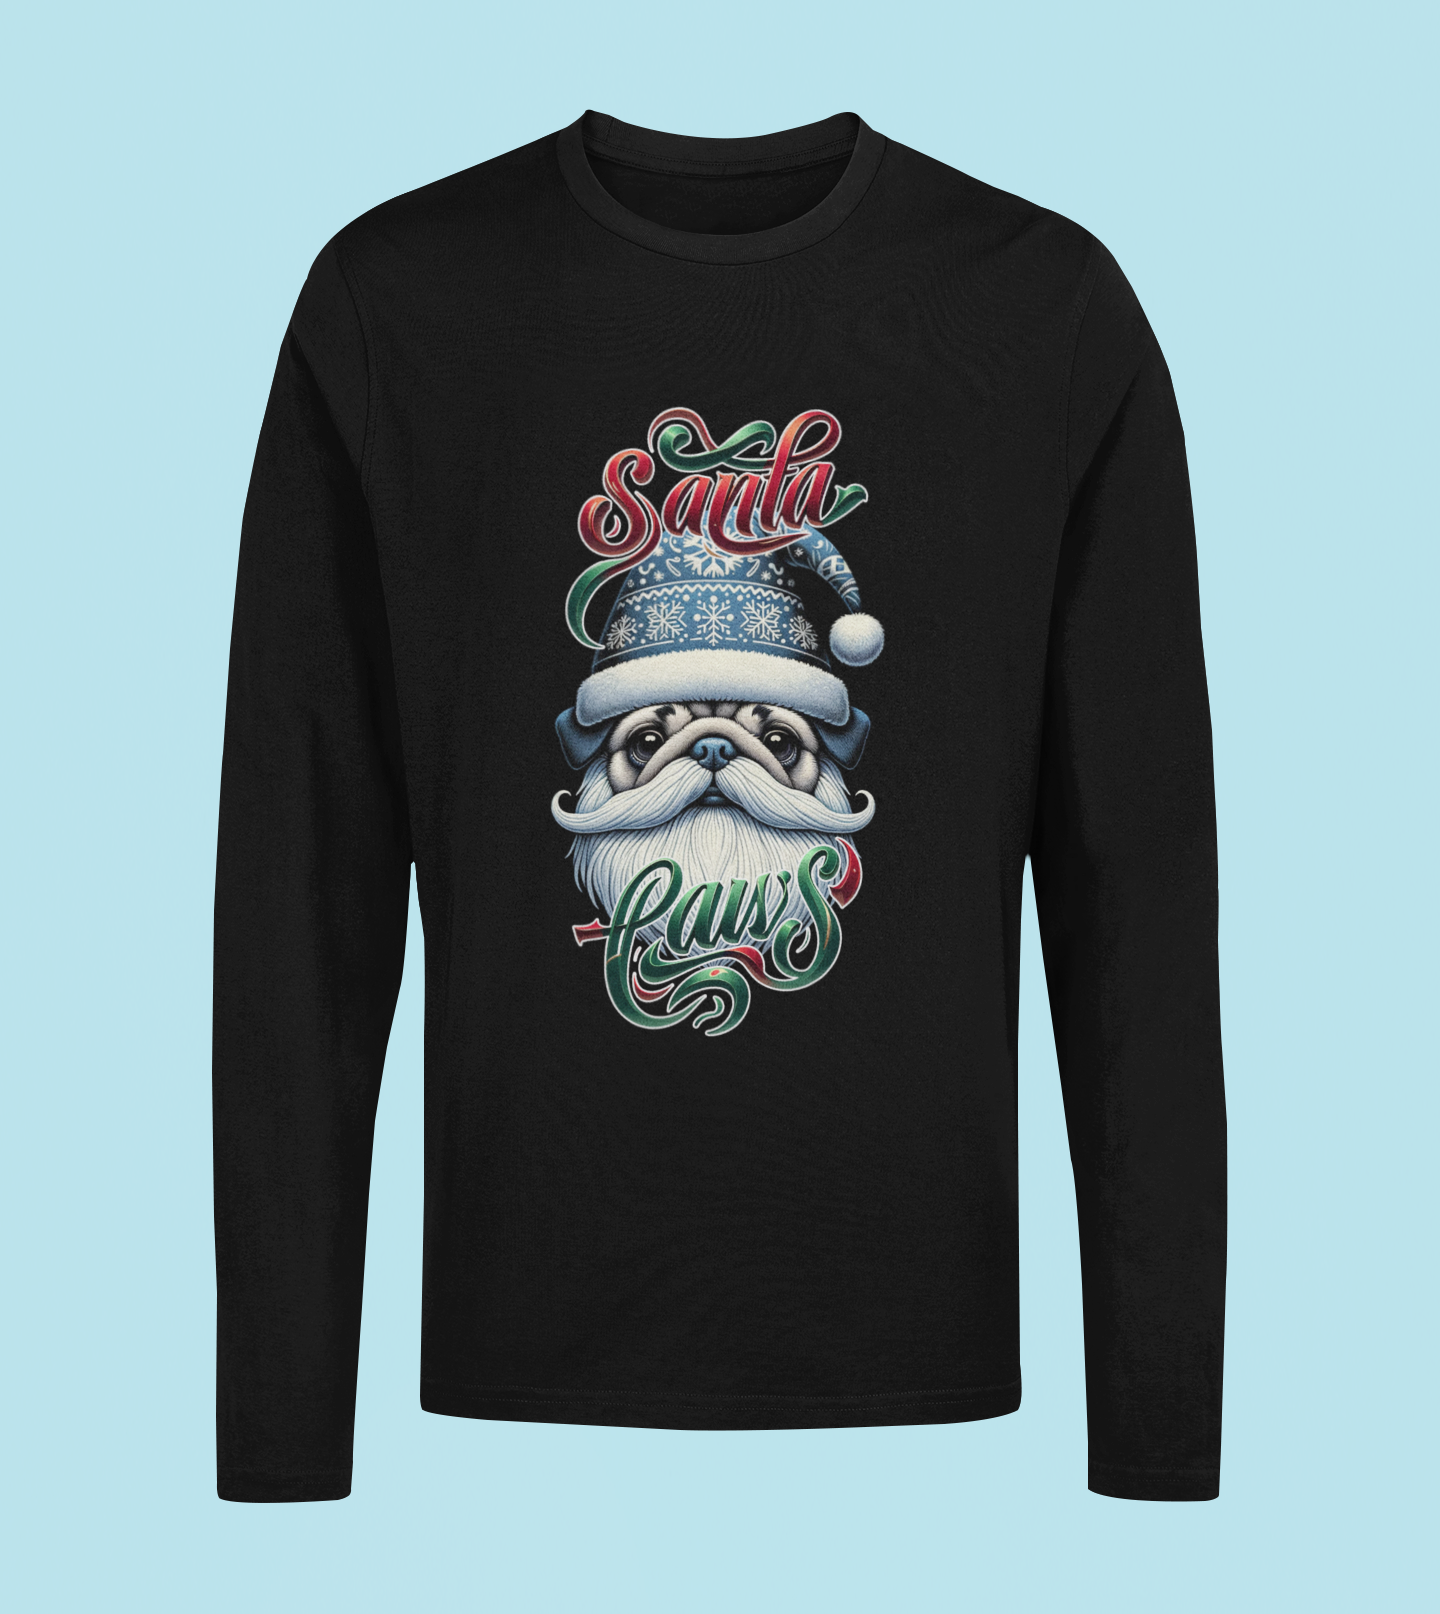 Santa Paws Long Sleeve Tee -Pug Design - 100% Cotton - USA Made - Holiday Party Favorites